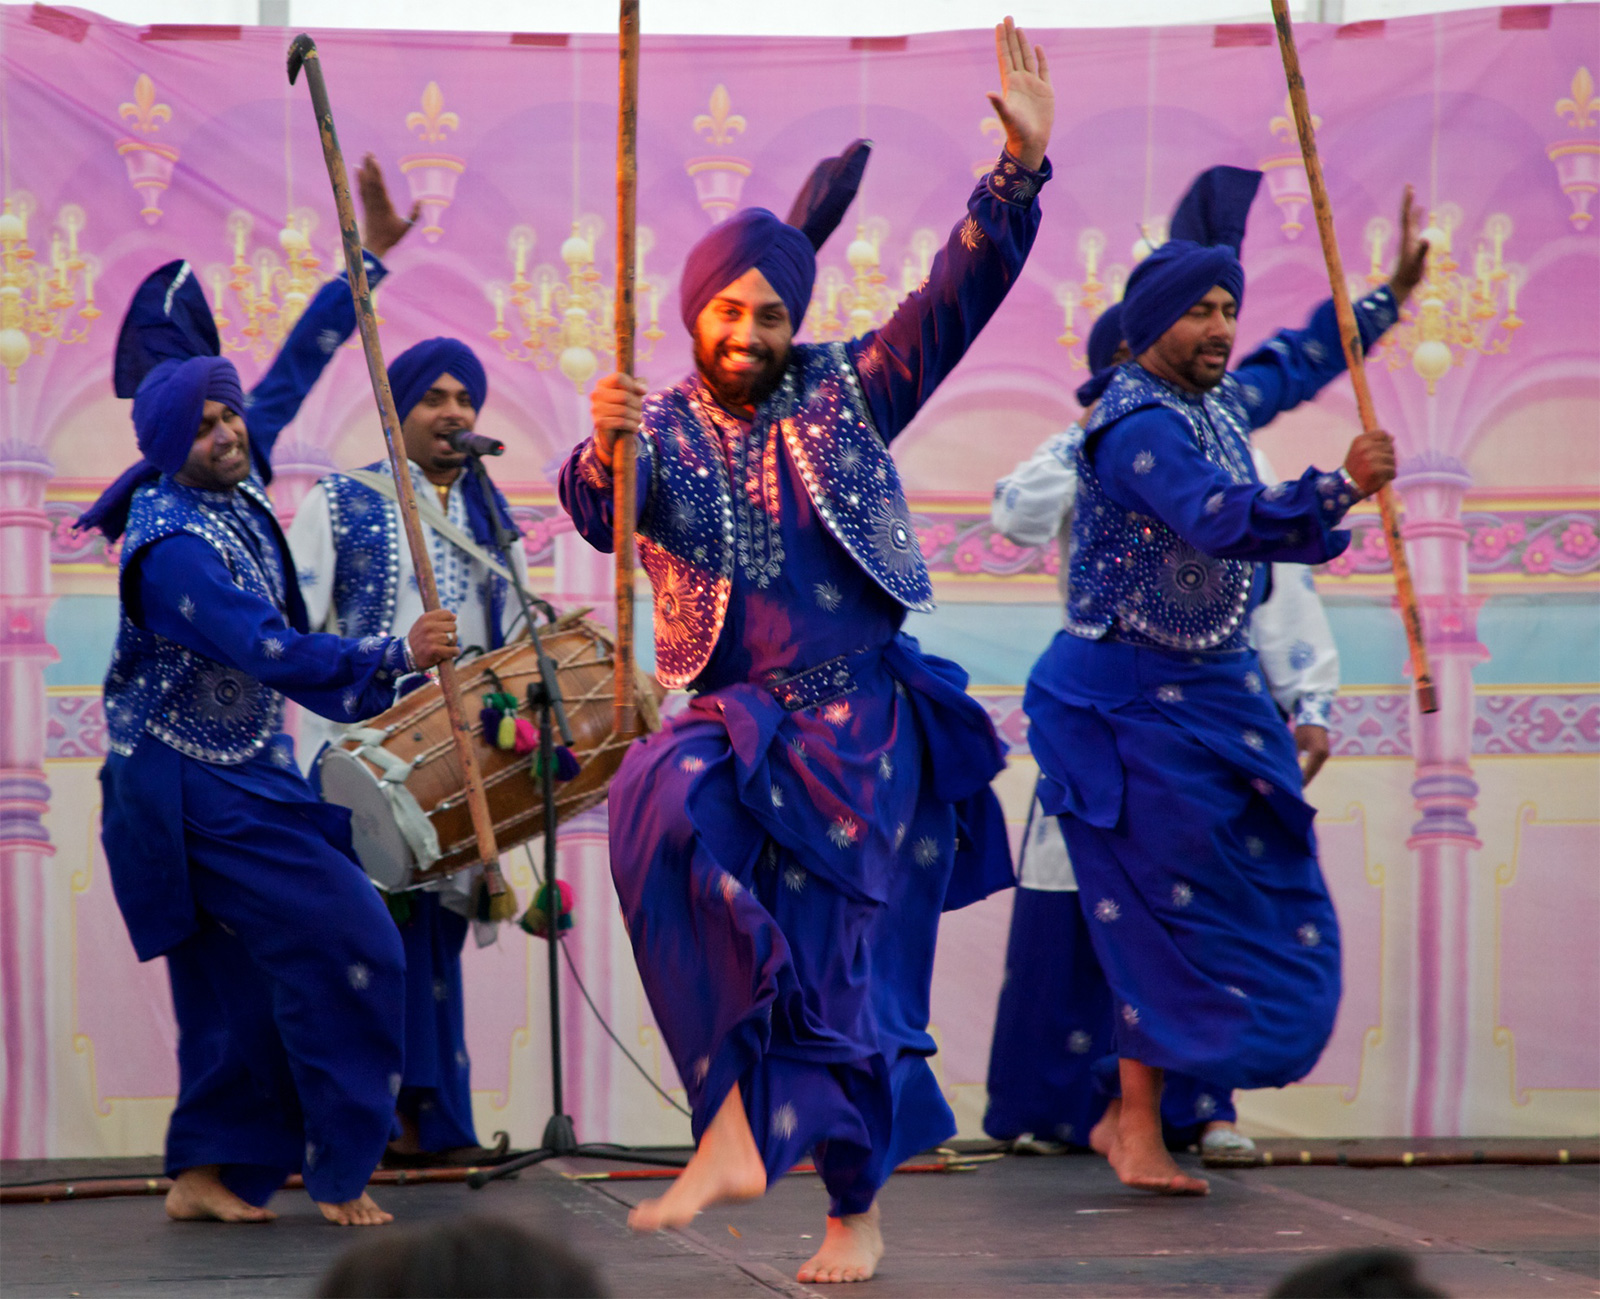 Bhangra dance of the Punjab region.